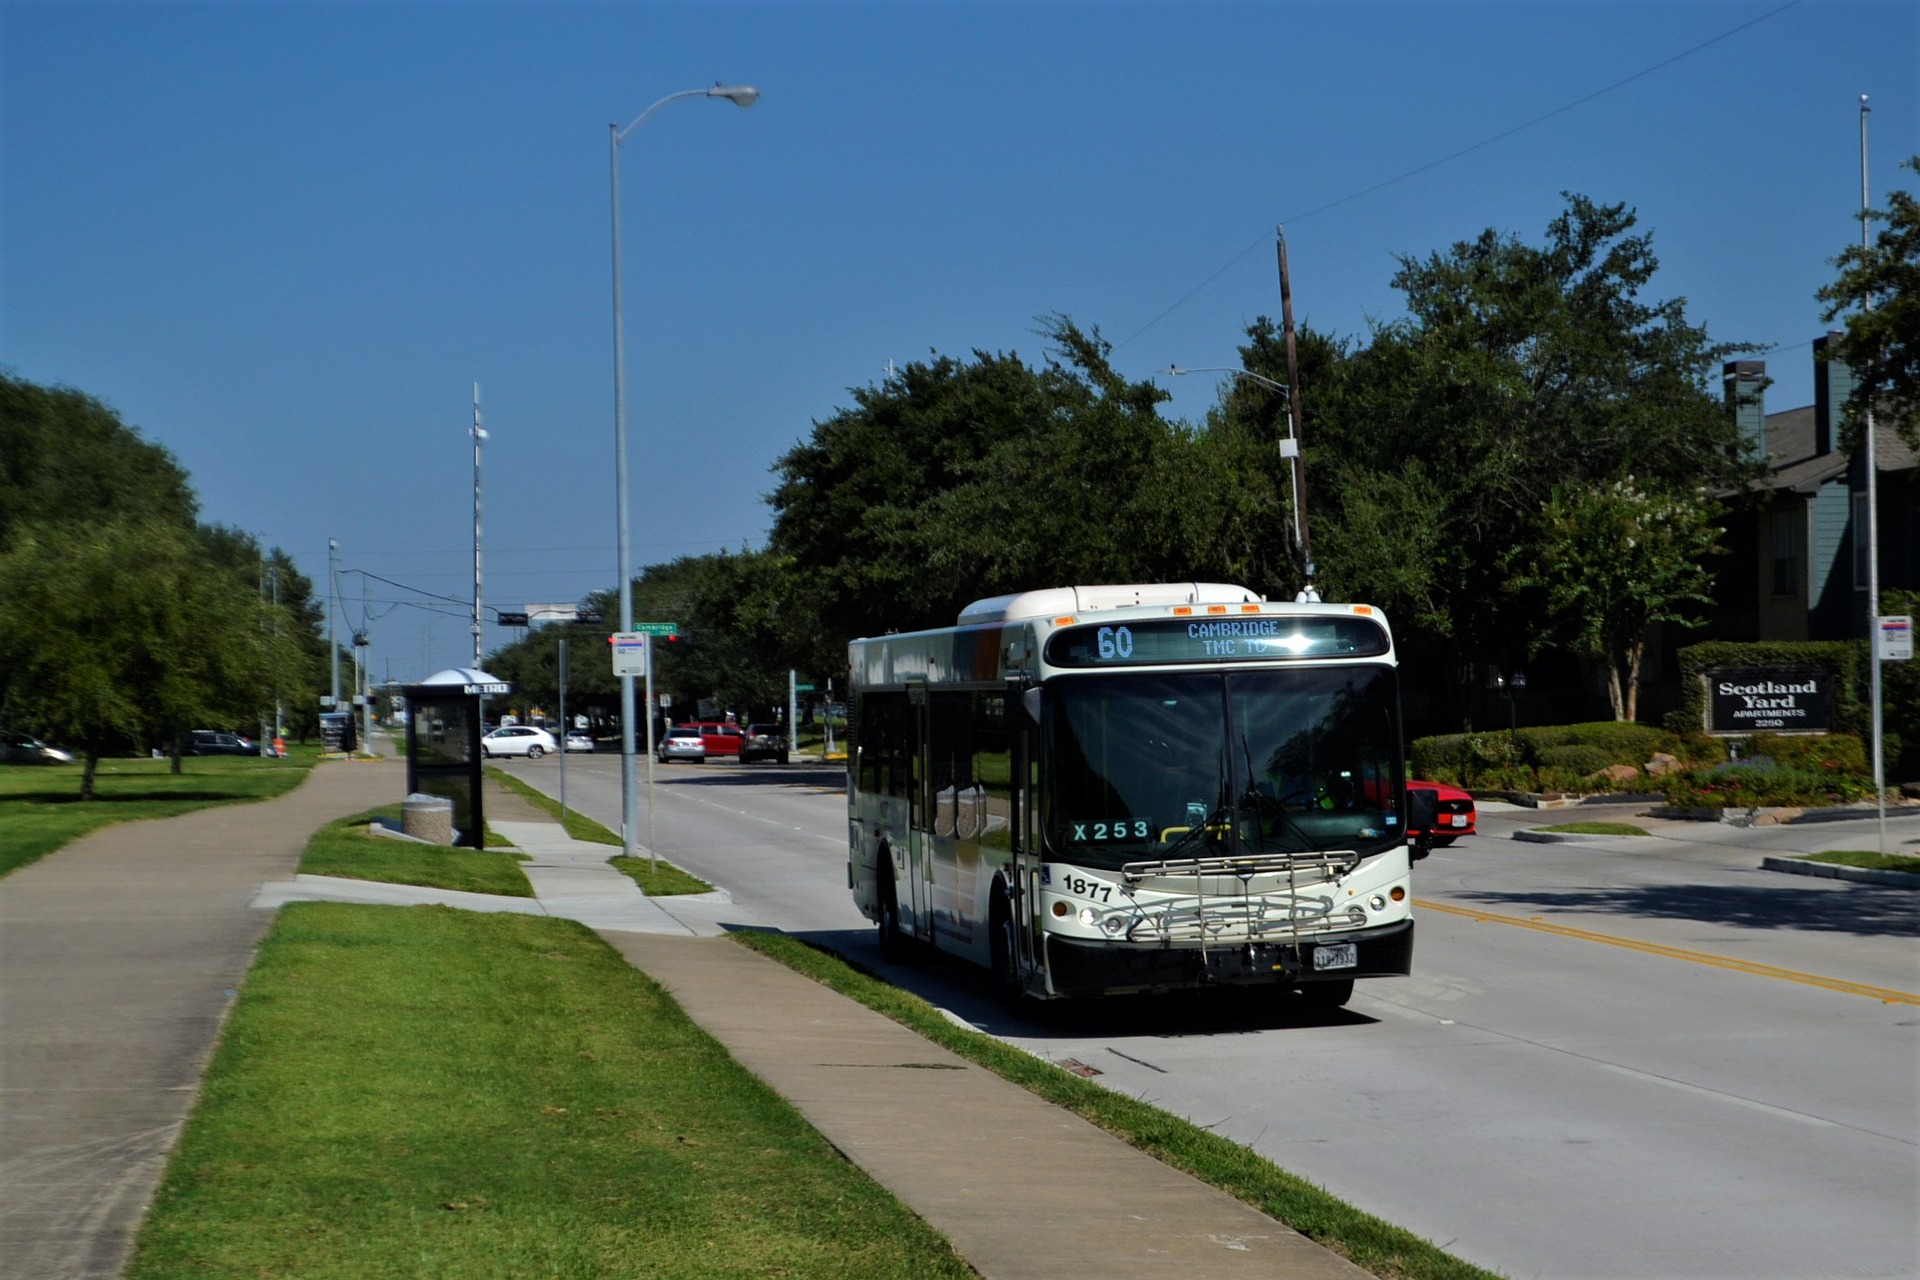 A city bus providing public transportation.